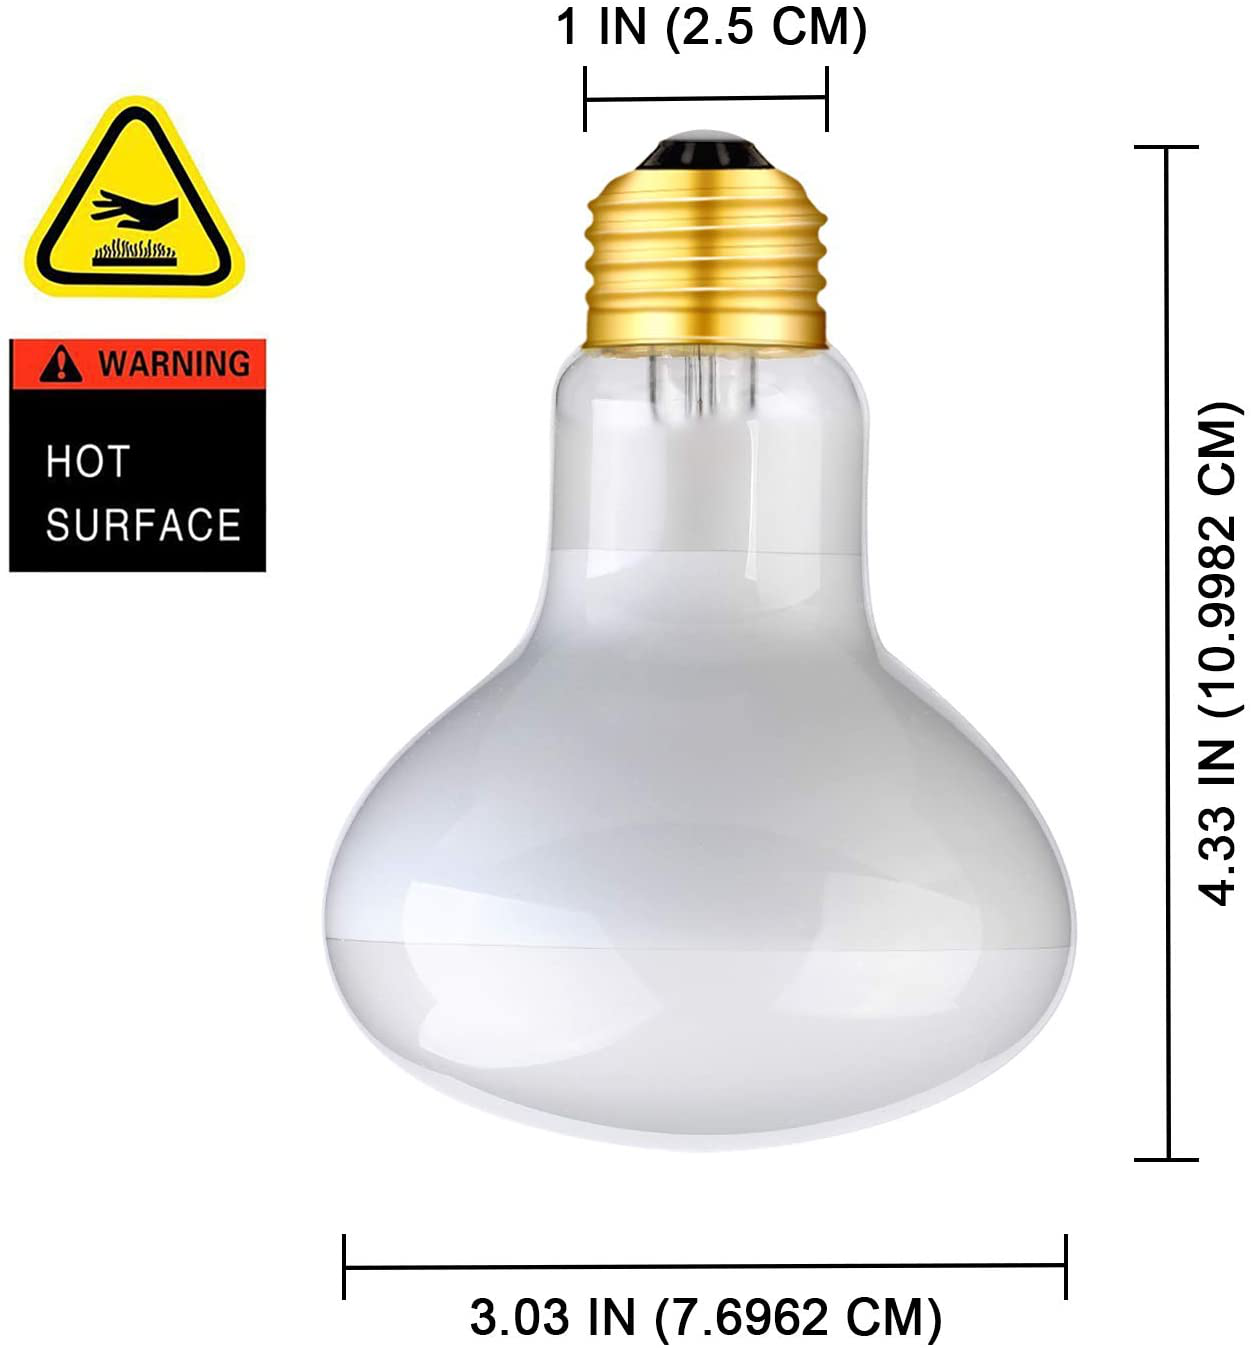 Aomryom 75W 2 Pack UVA Basking Spot Lamp Soft White Light Glass Heat Bulb for Reptiles & Amphibians